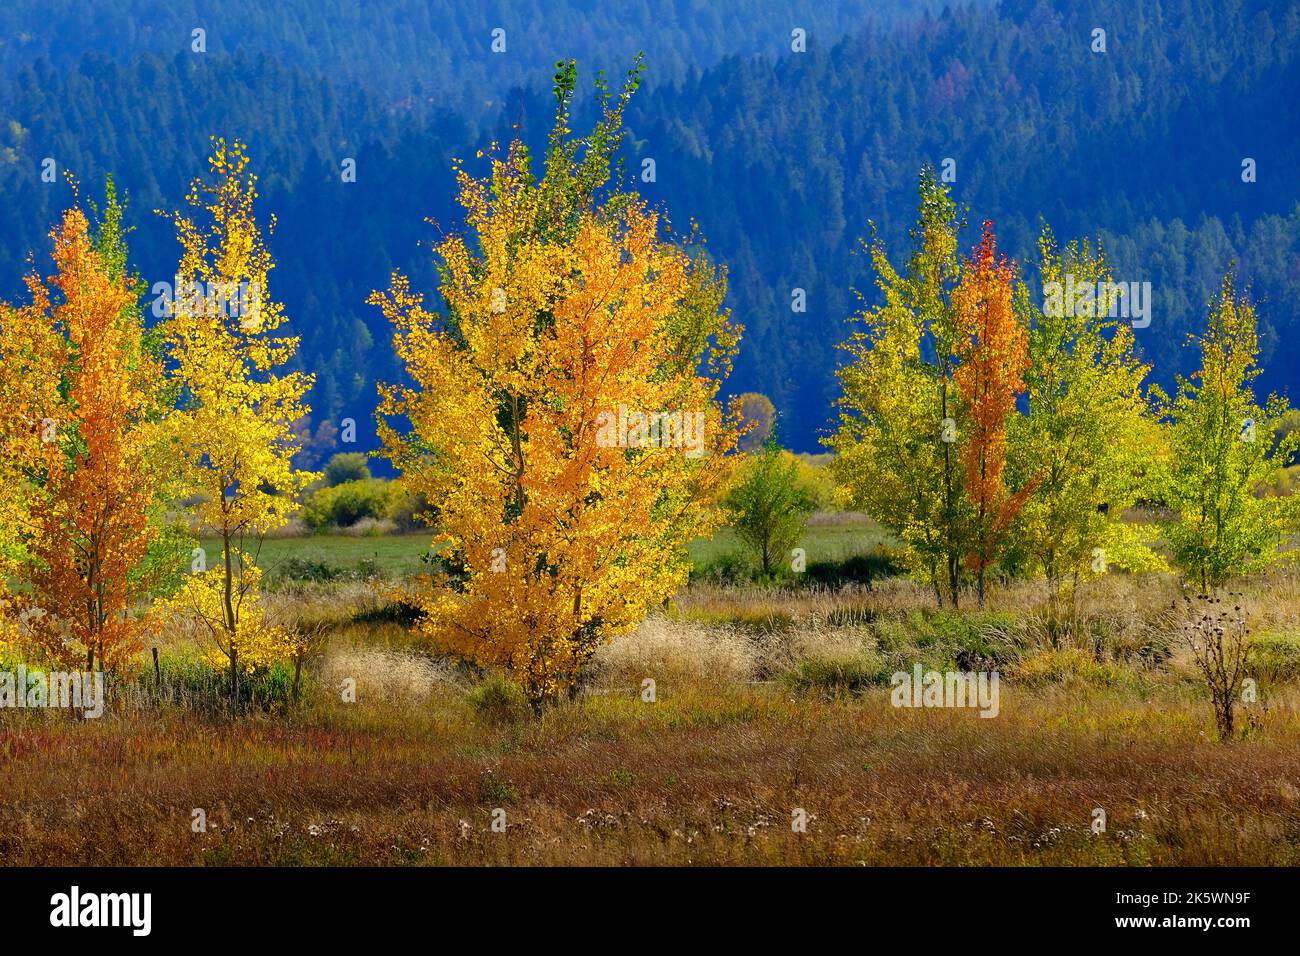 Berge Berghang Wildnis Wald Herbst Espen Birken weißen Stämme goldenen und grünen Farben Stockfoto